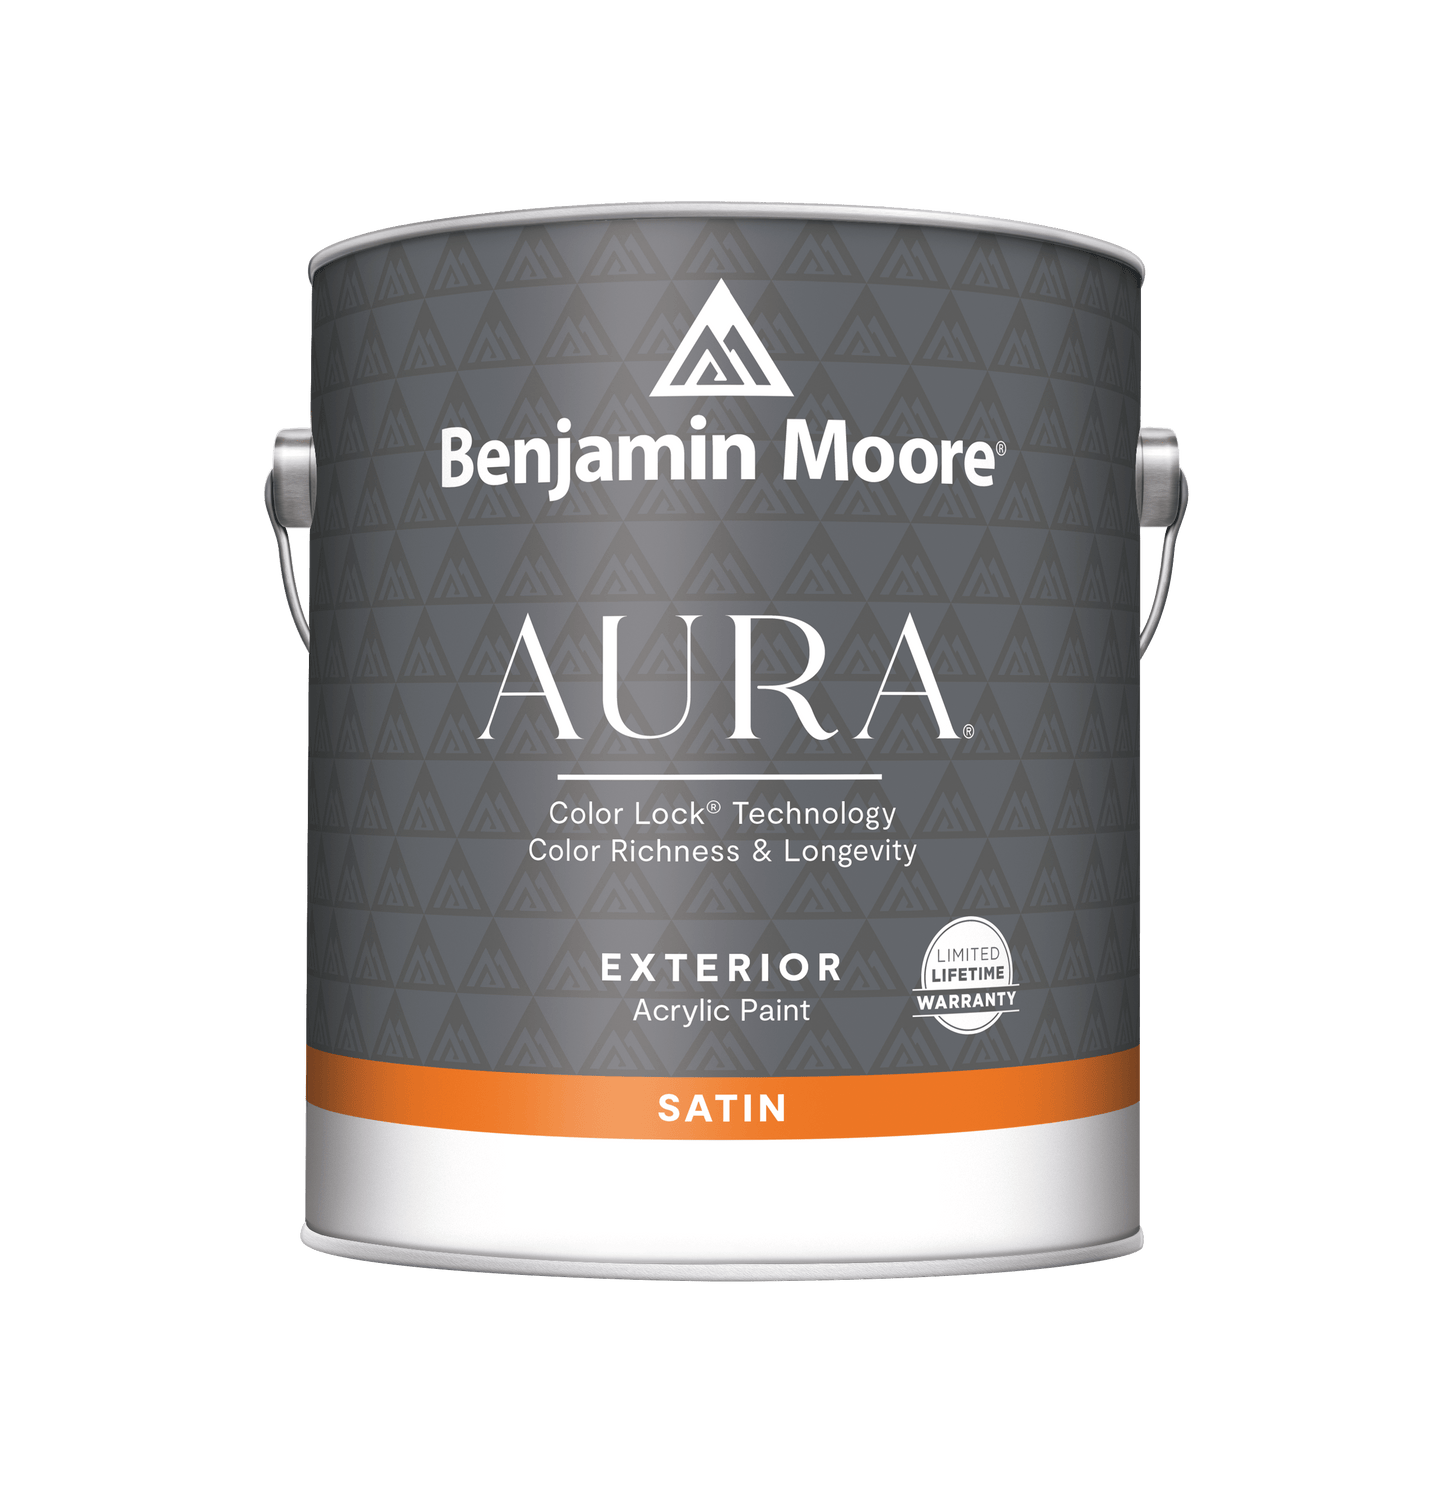 Benjamin Moore Aura - Rossi Paint Stores - Satin - Gallon